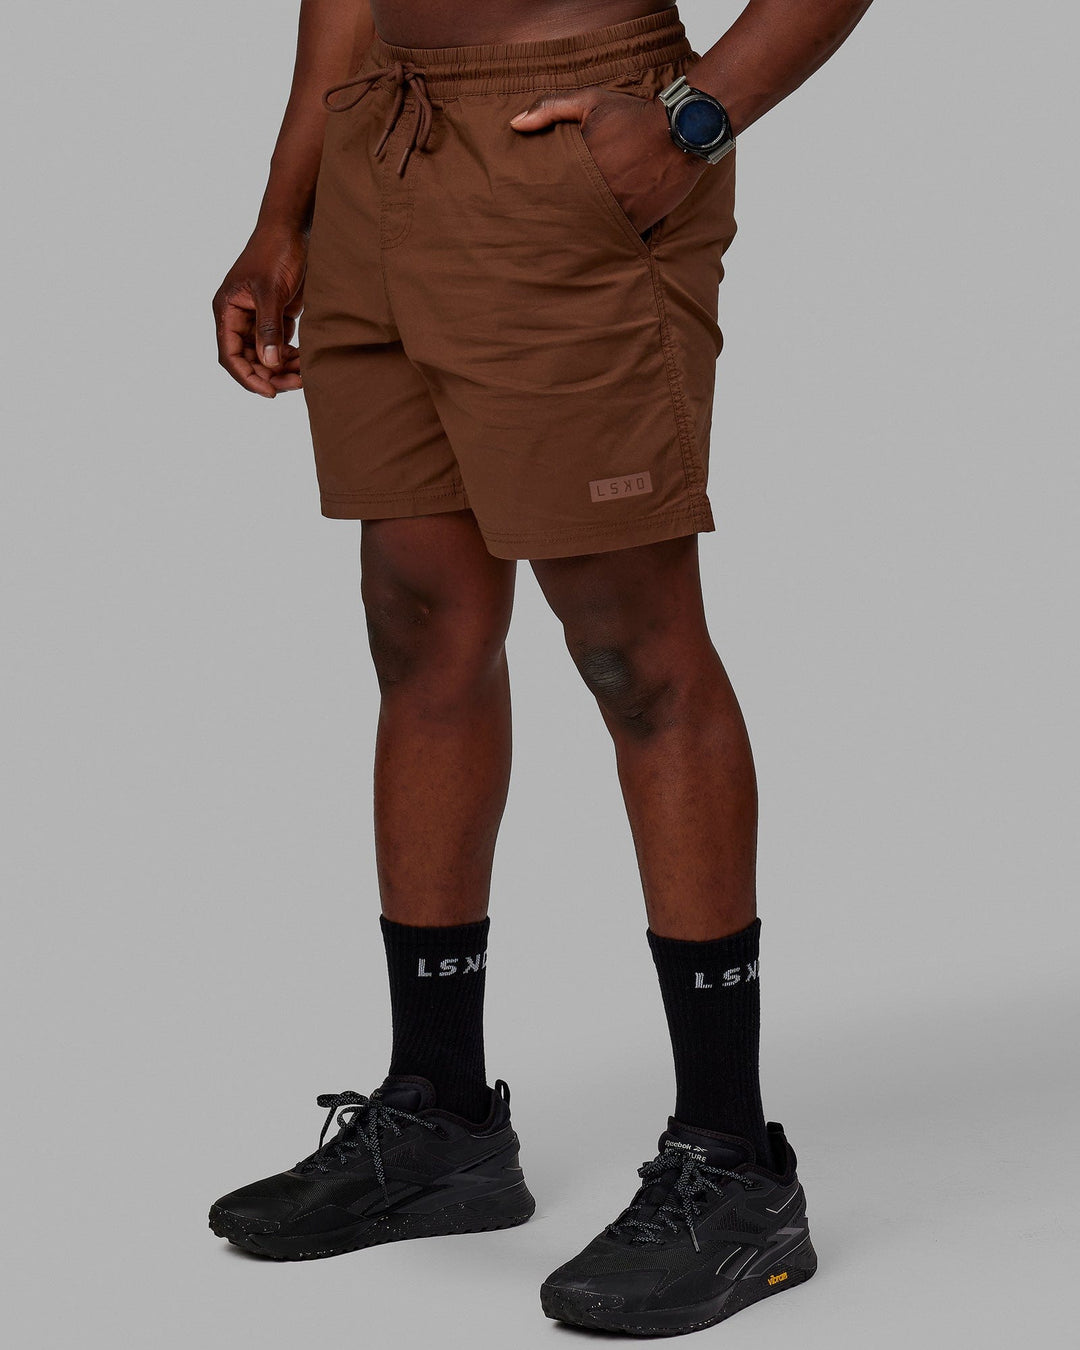 Man wearing Daily Shorts - Cappuccino